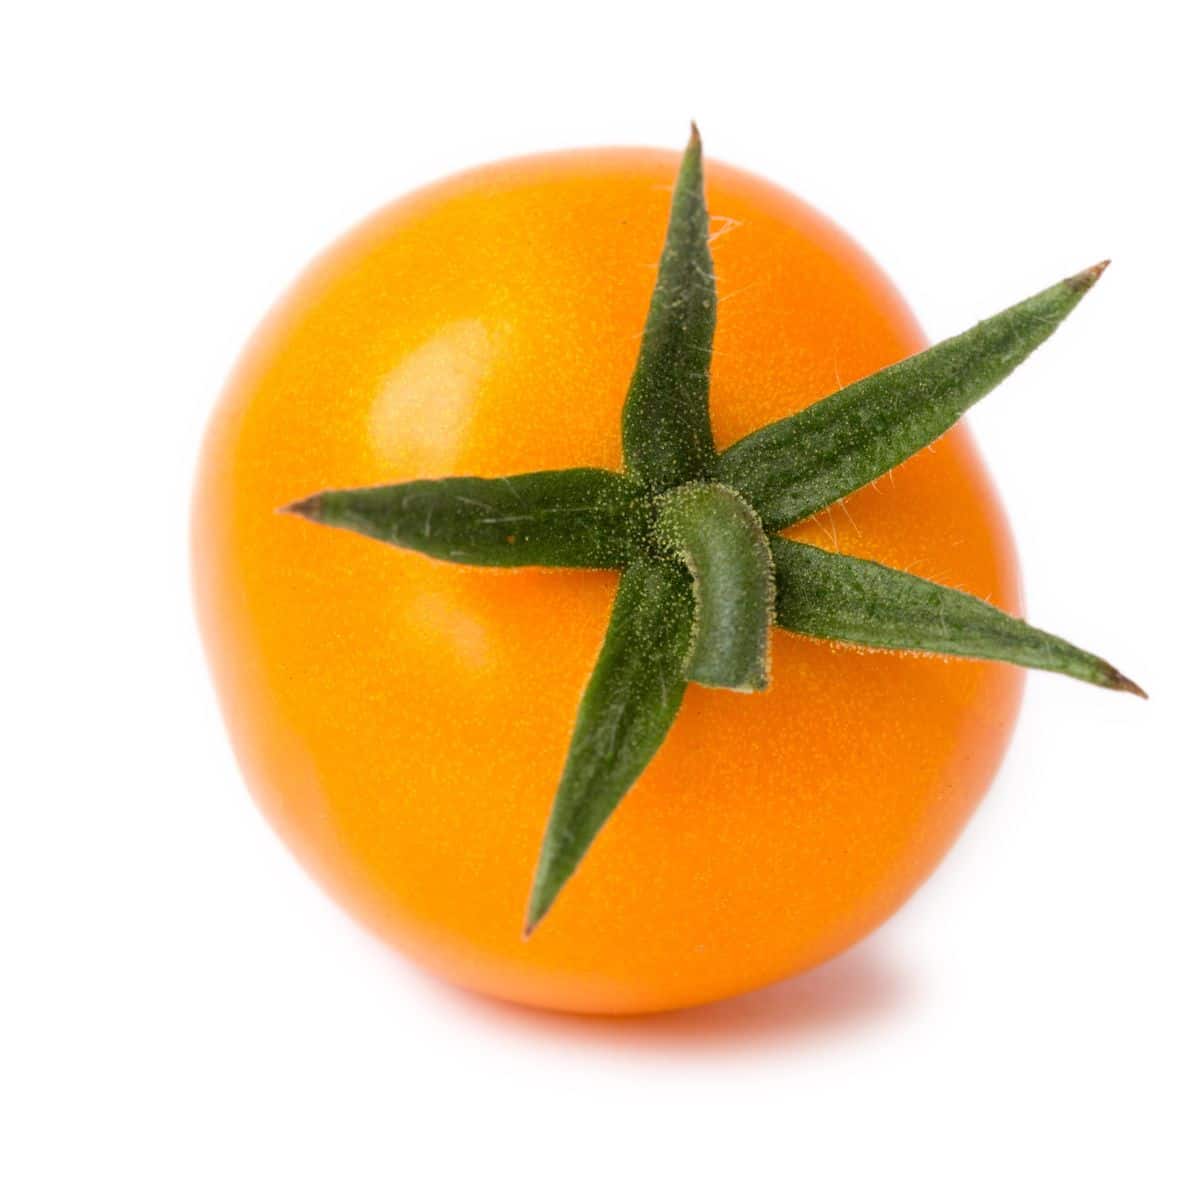 Orange cherry tomato on an isolated white background.